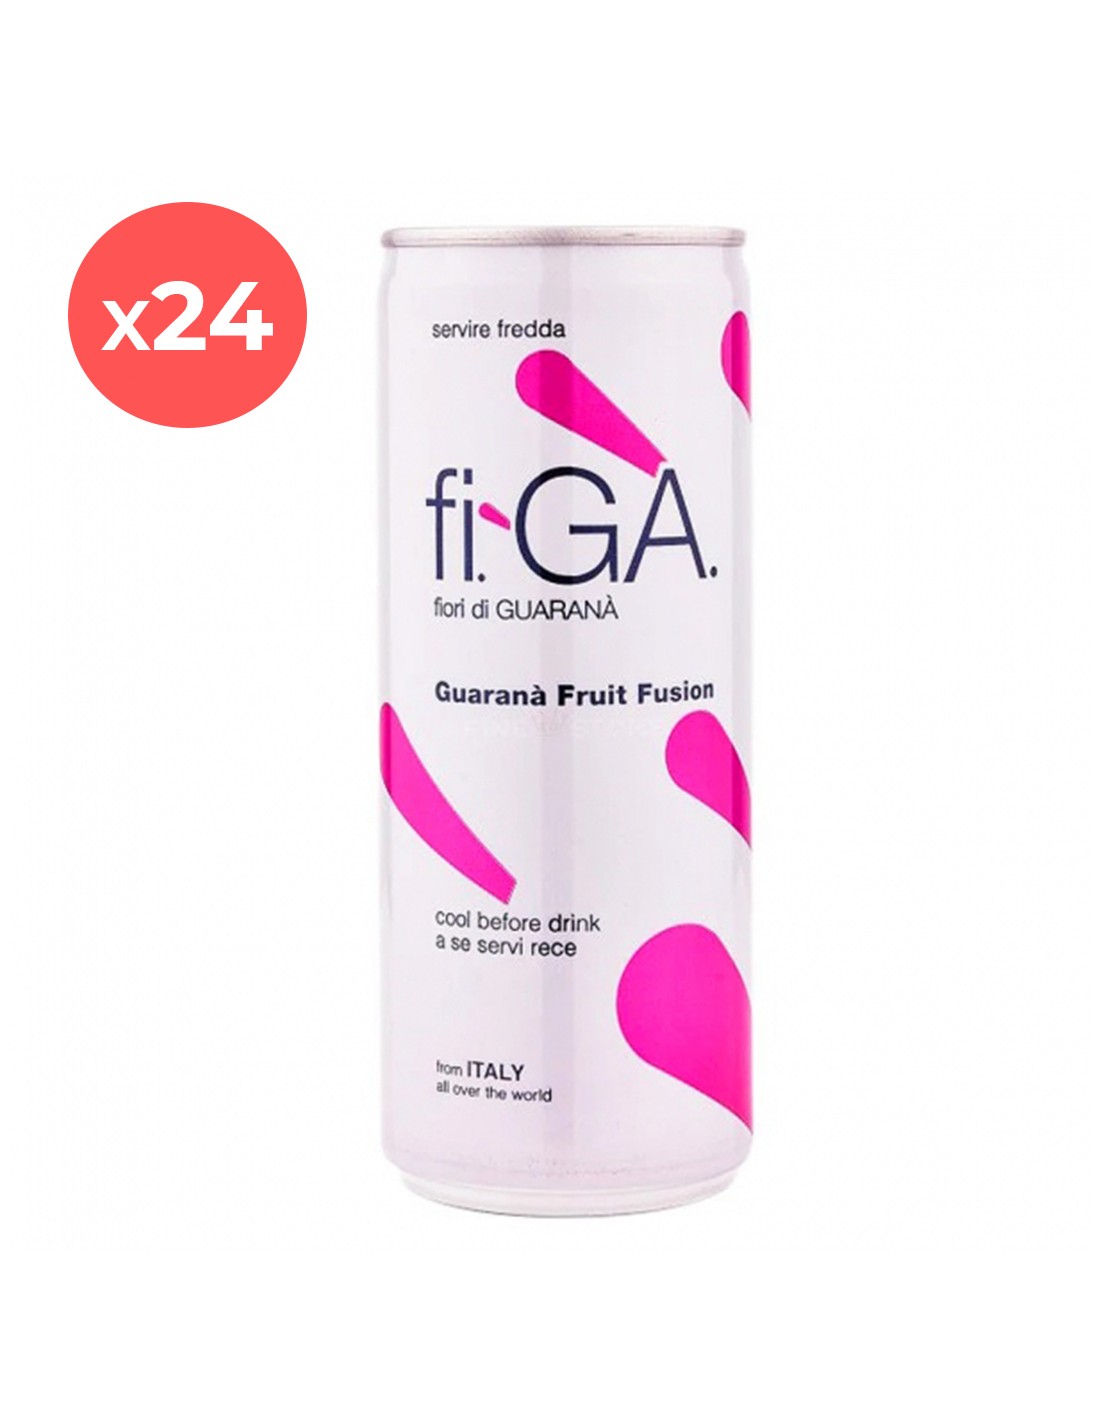 Bax 24 bucati Energizant fi-Ga Fruit Fusion, 0.25L alcooldiscount.ro